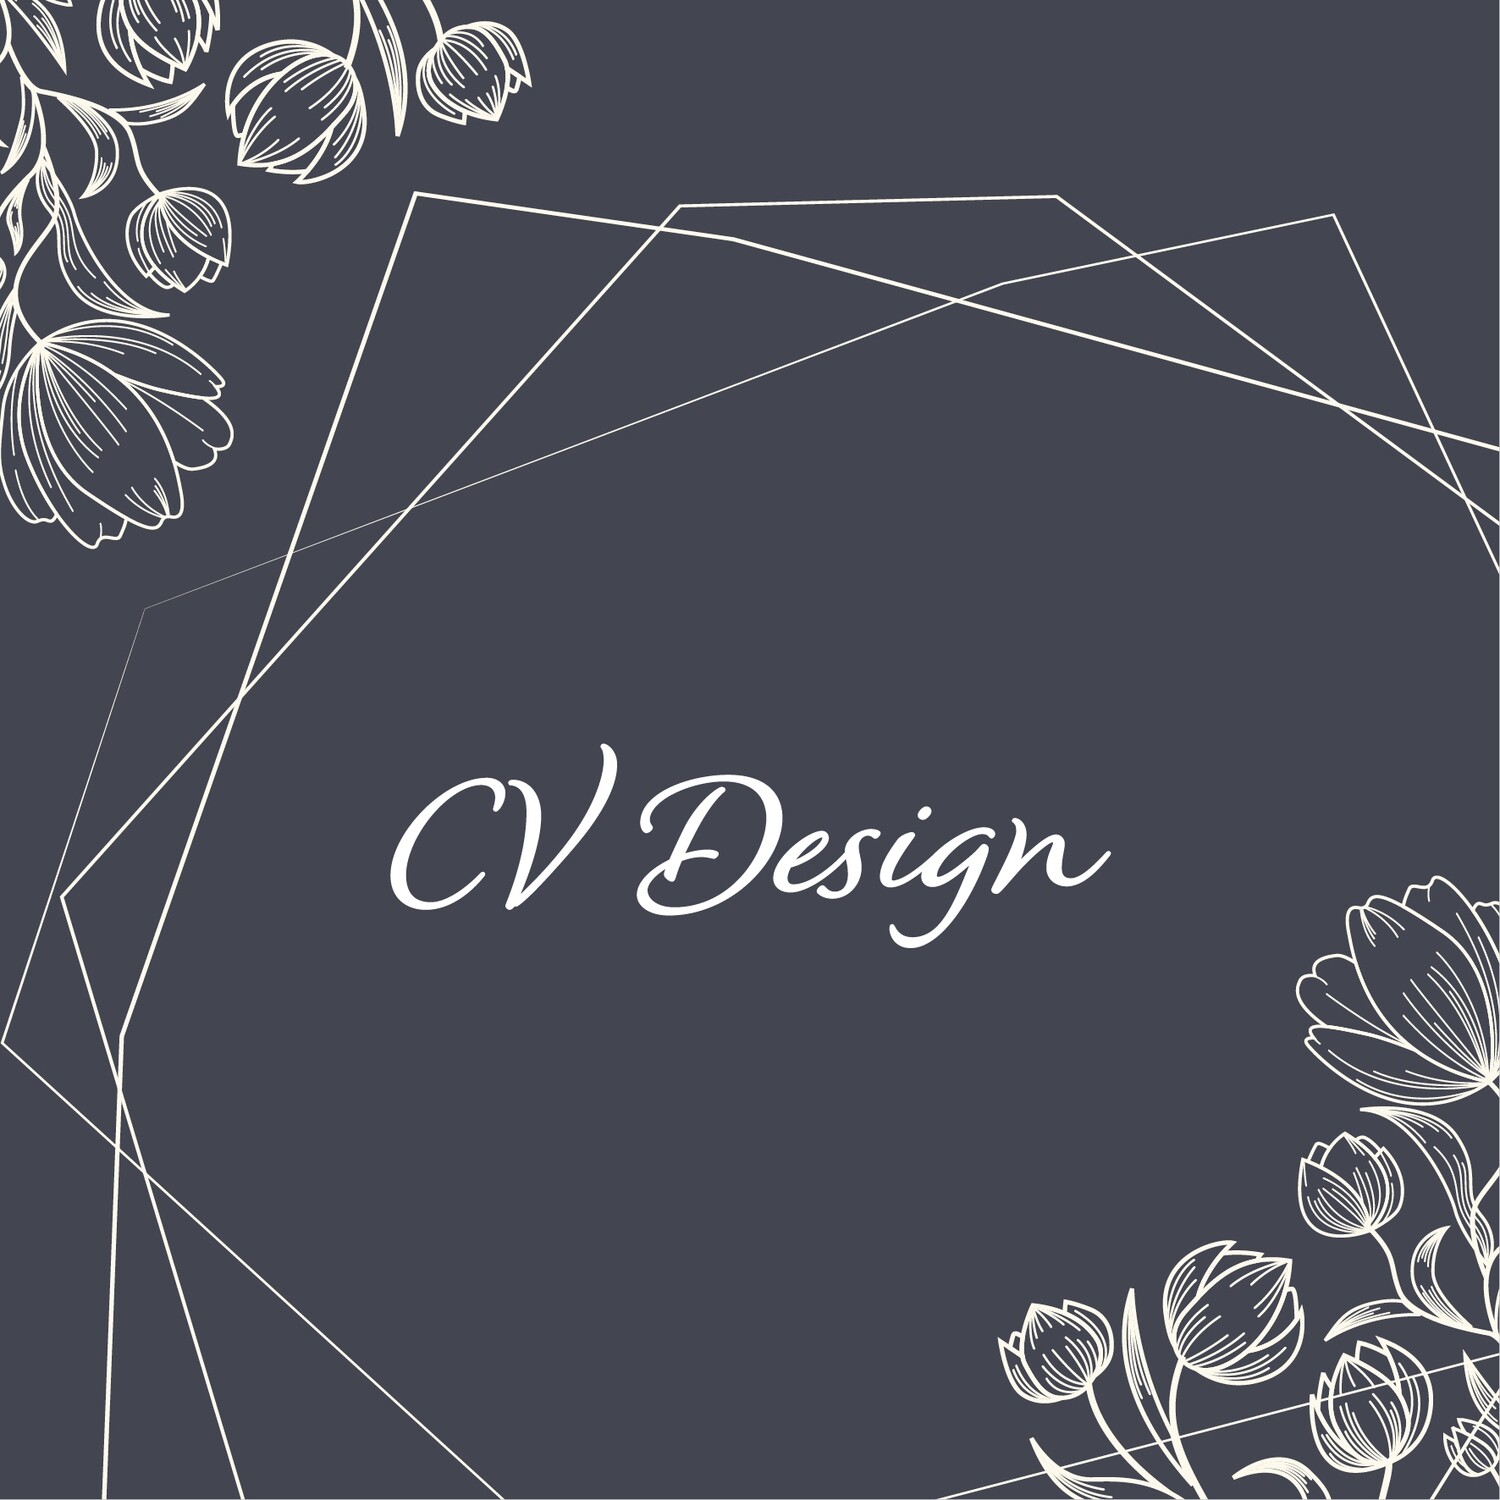 CV Design